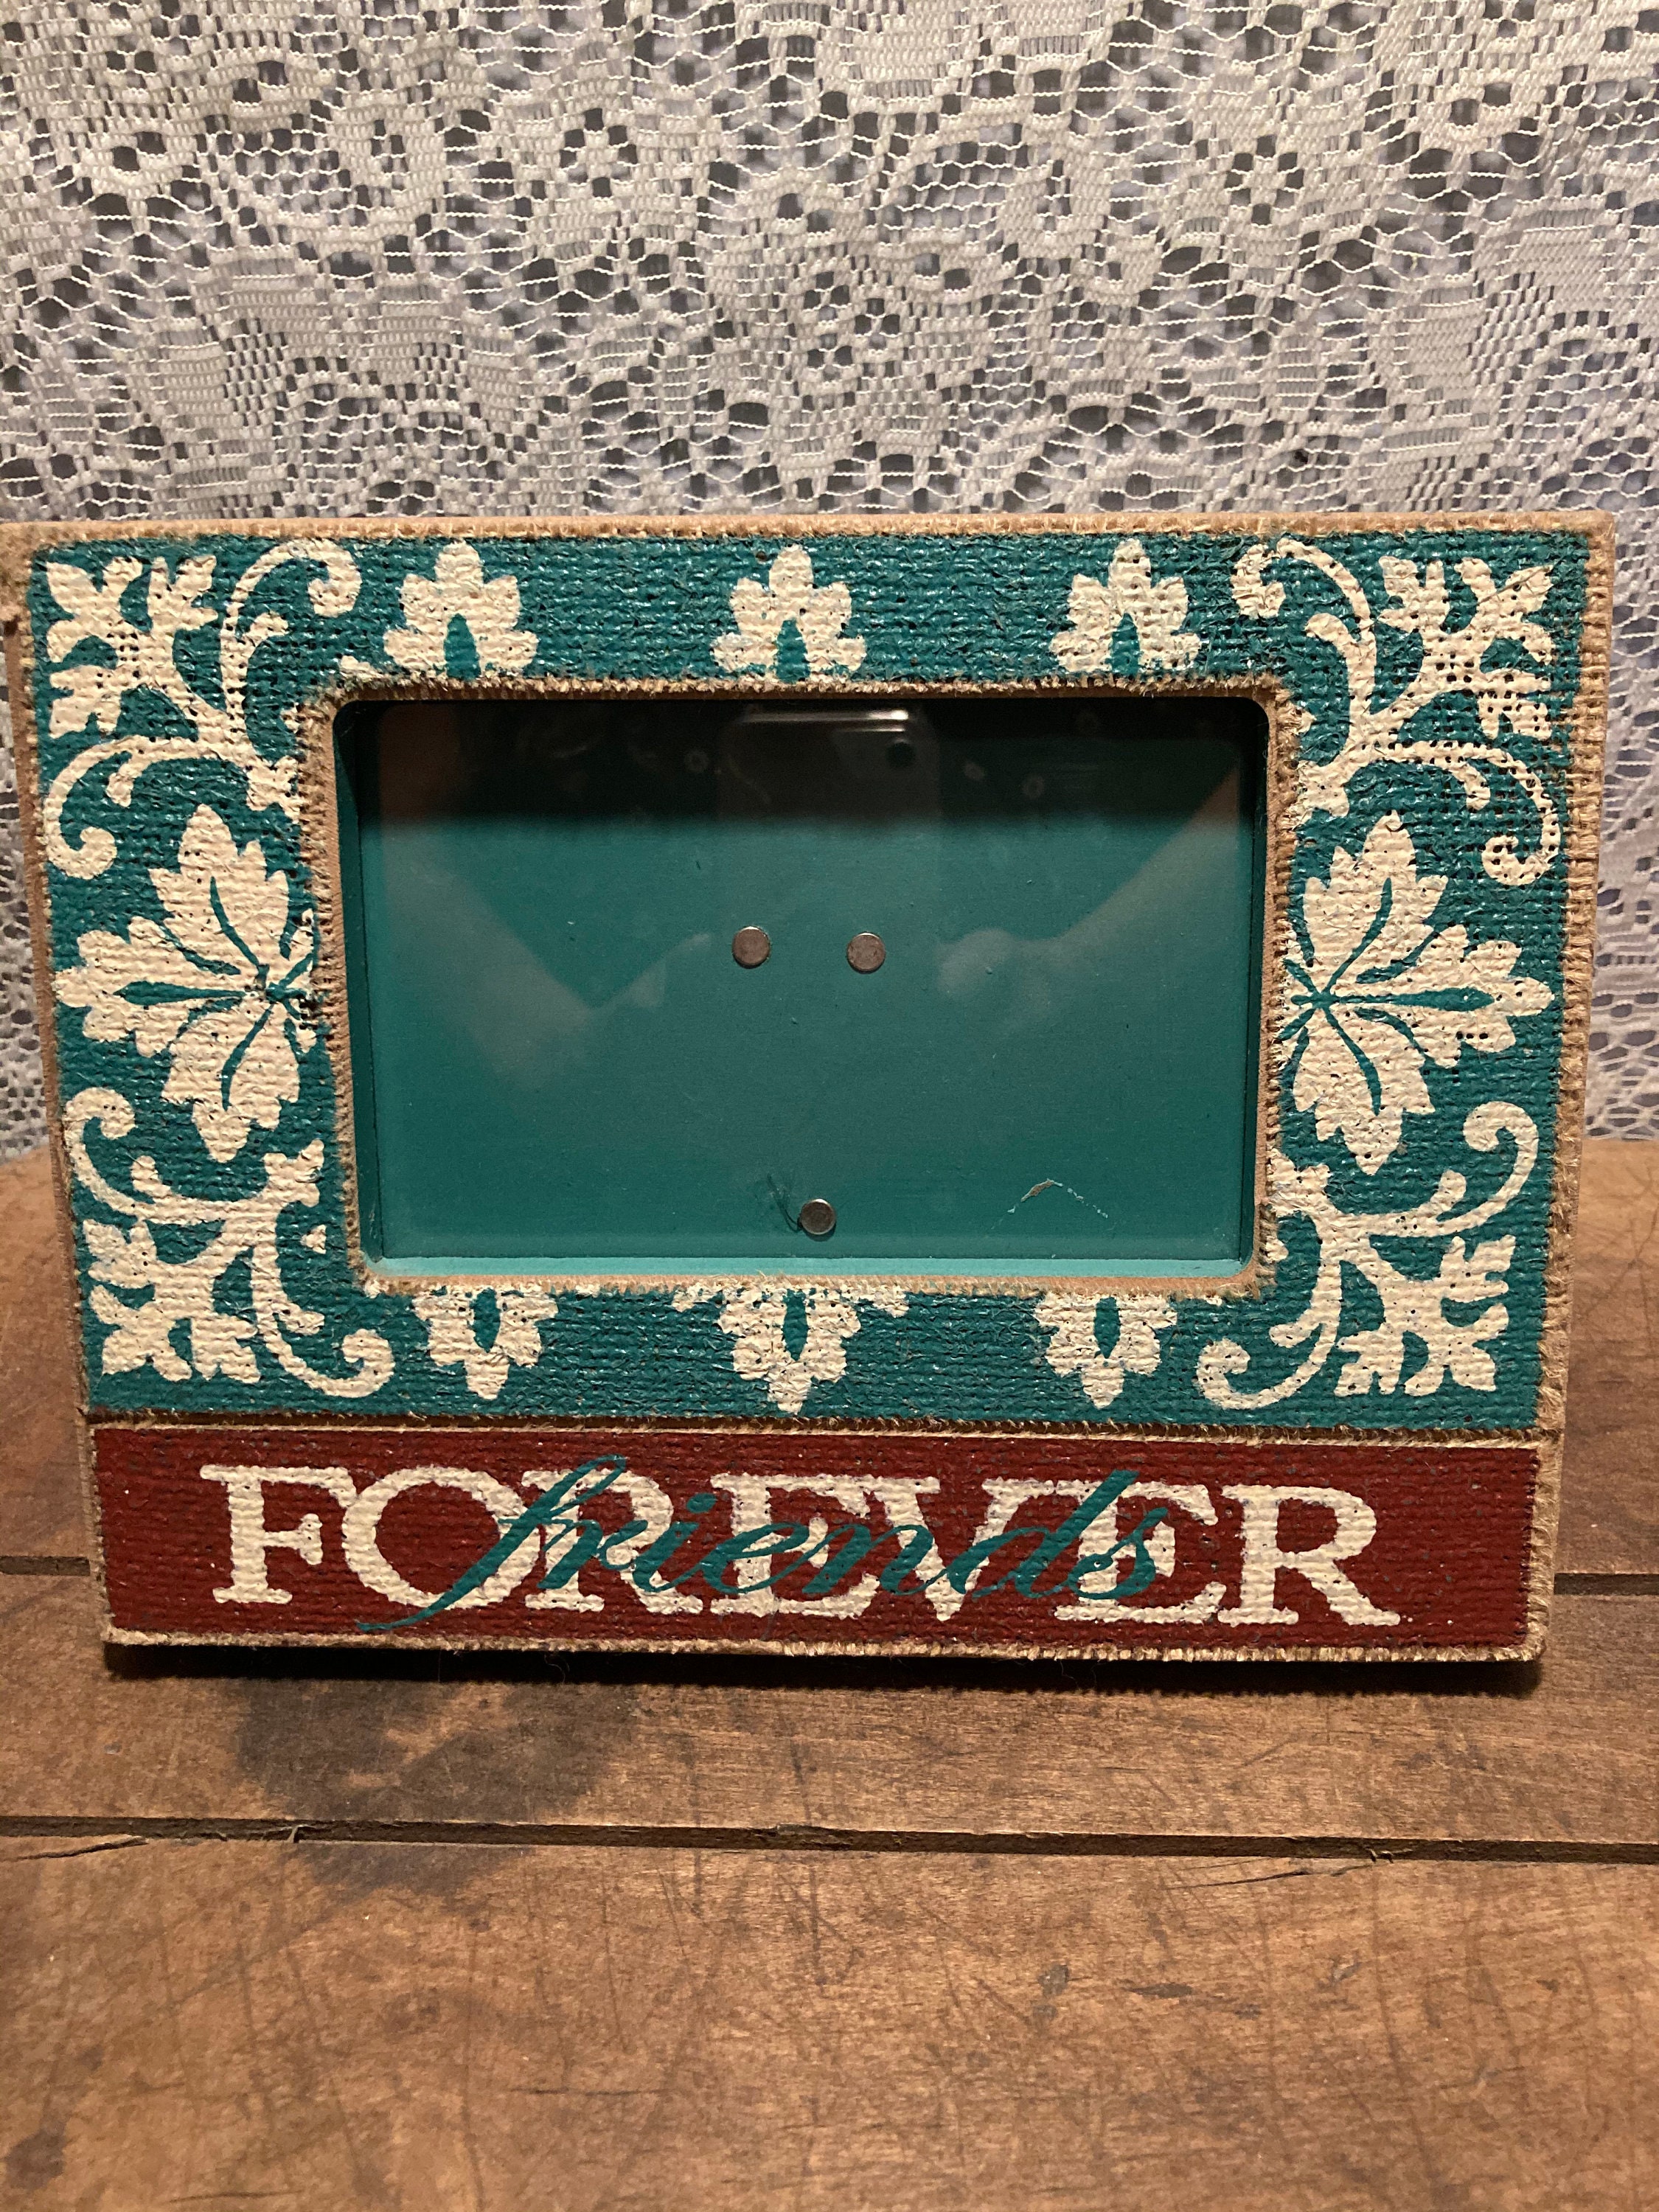 Forever Friends Wood Photo Frame – Cedar Crate